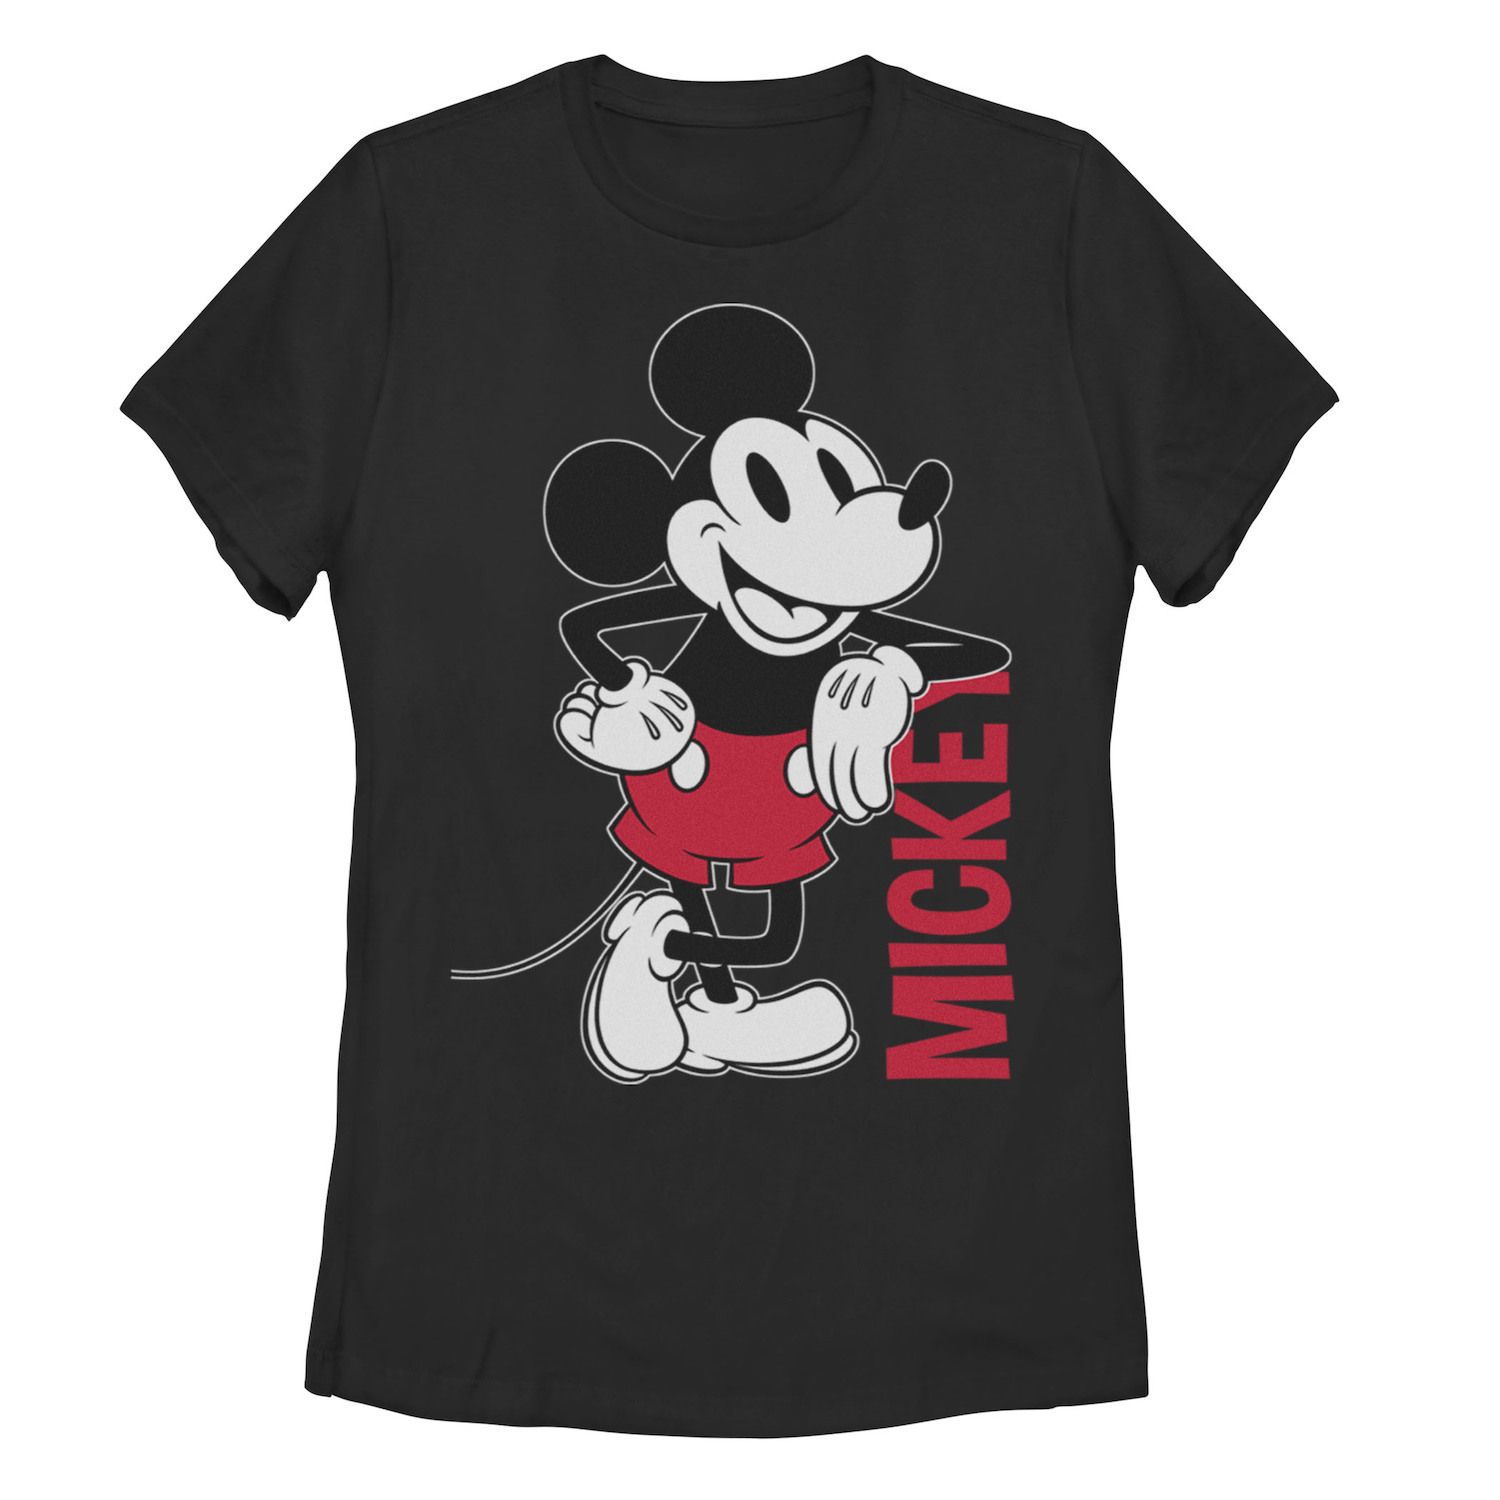 Винтажная футболка Disney с Микки Маусом для юниоров Licensed Character футболка с надписью я спросил с предложением помолвки с микки маусом от disney licensed character